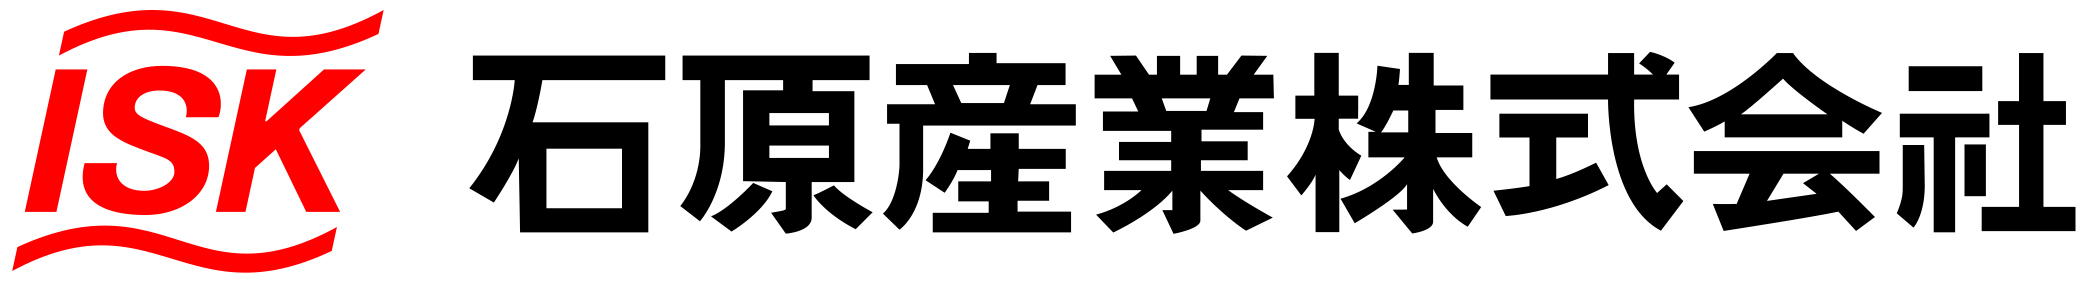 石原産業株式会社-ロゴ